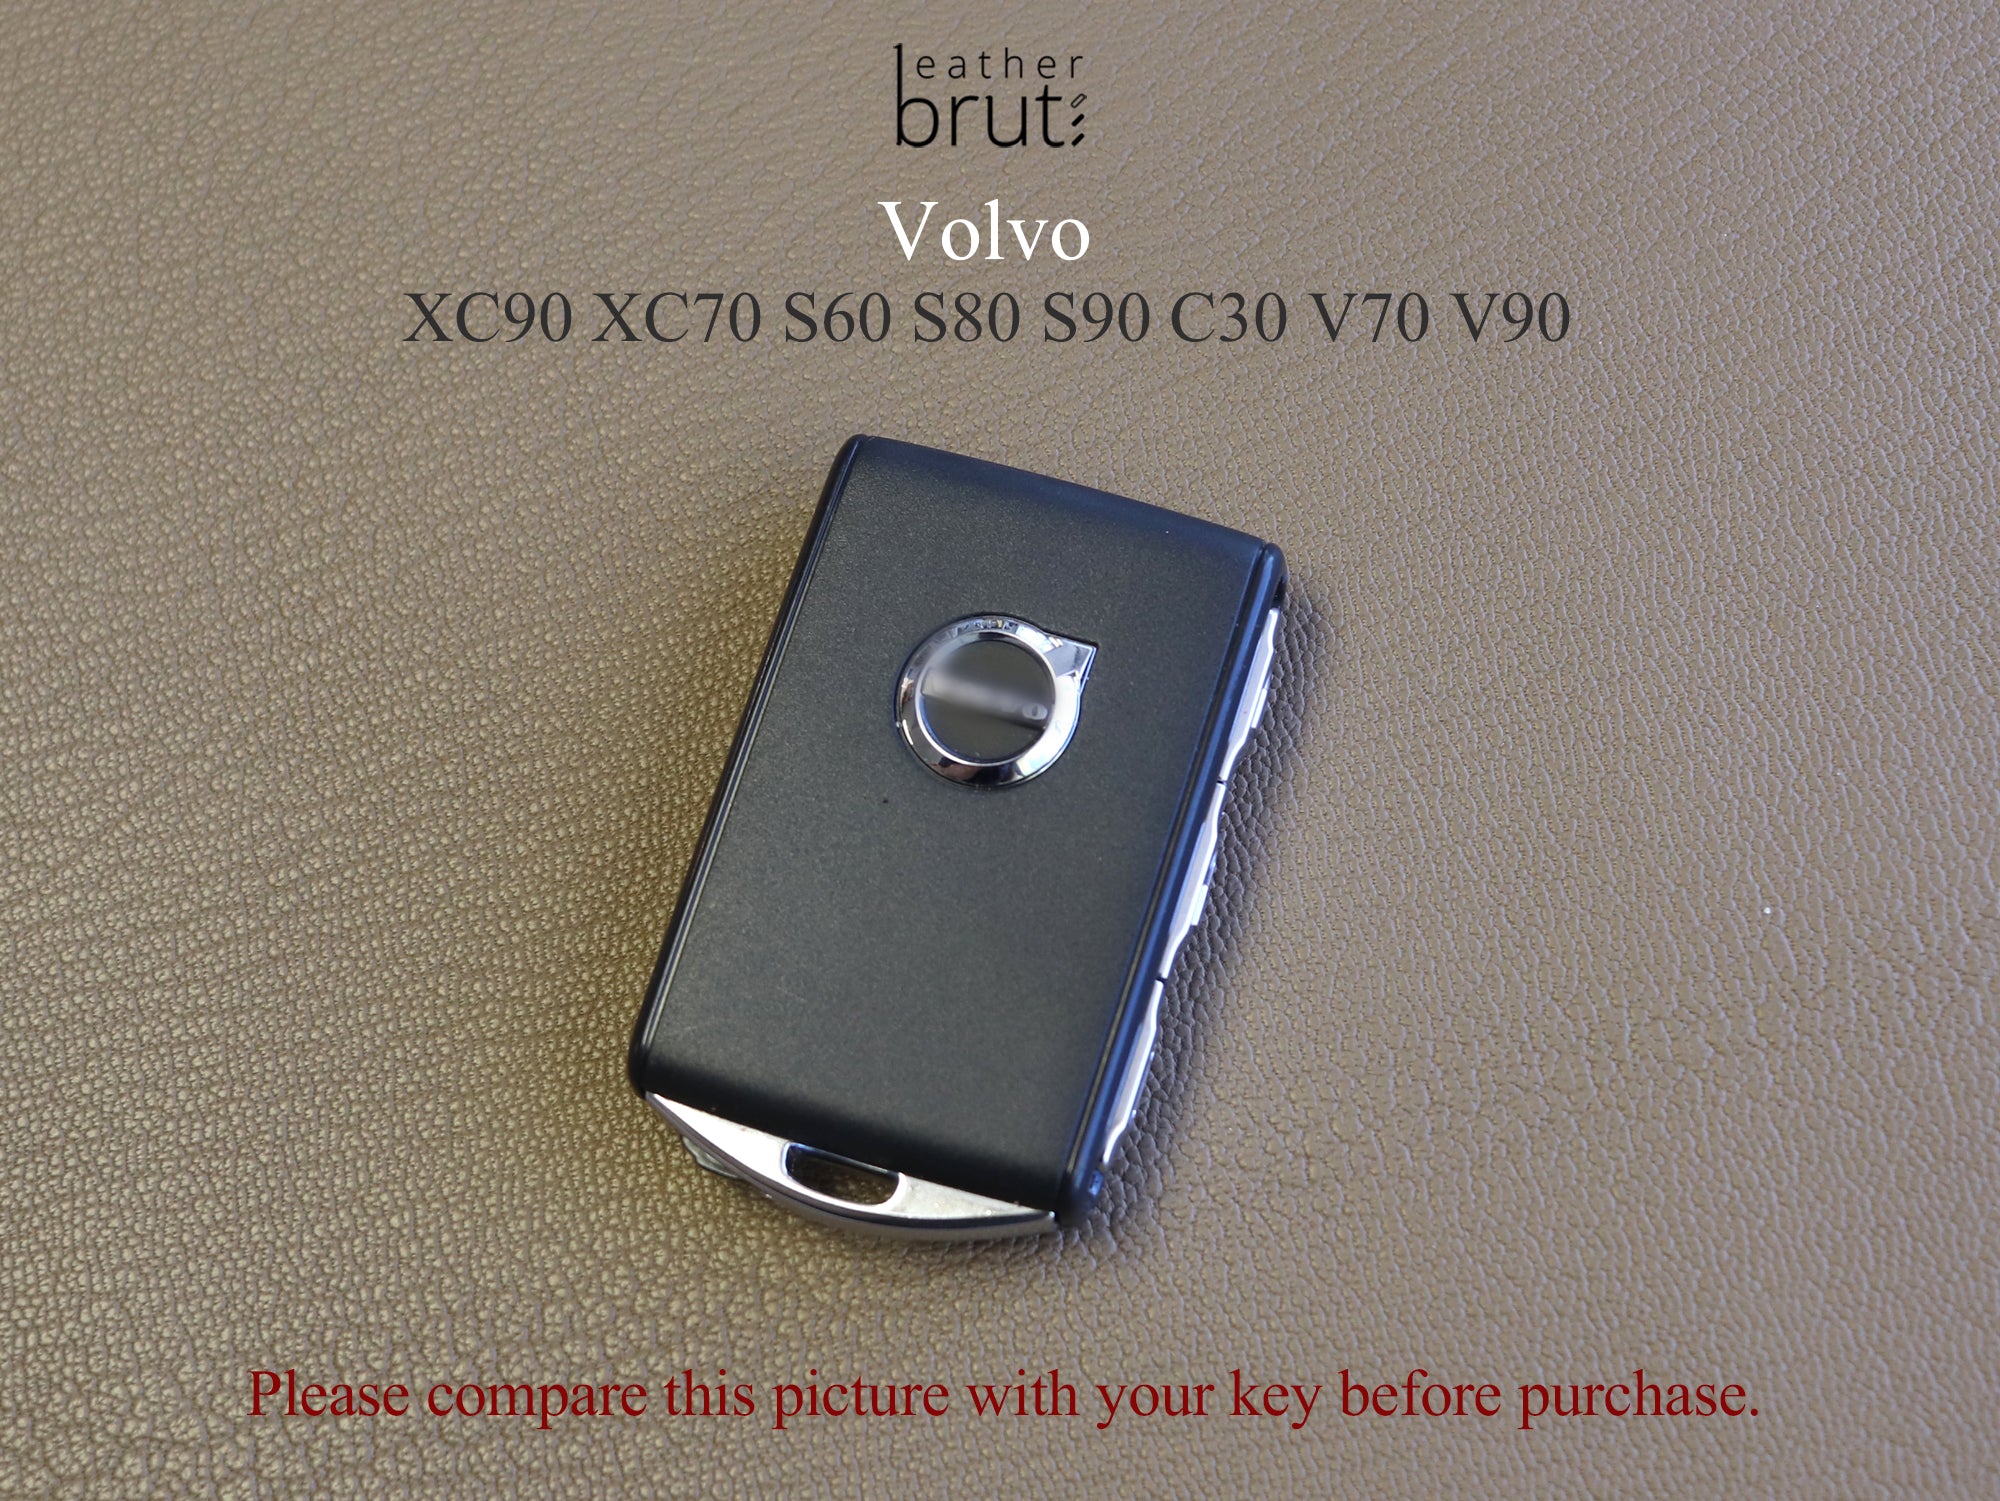 Inkmilan Car Key Cover PU Leather Remote Key Fob Case Bag